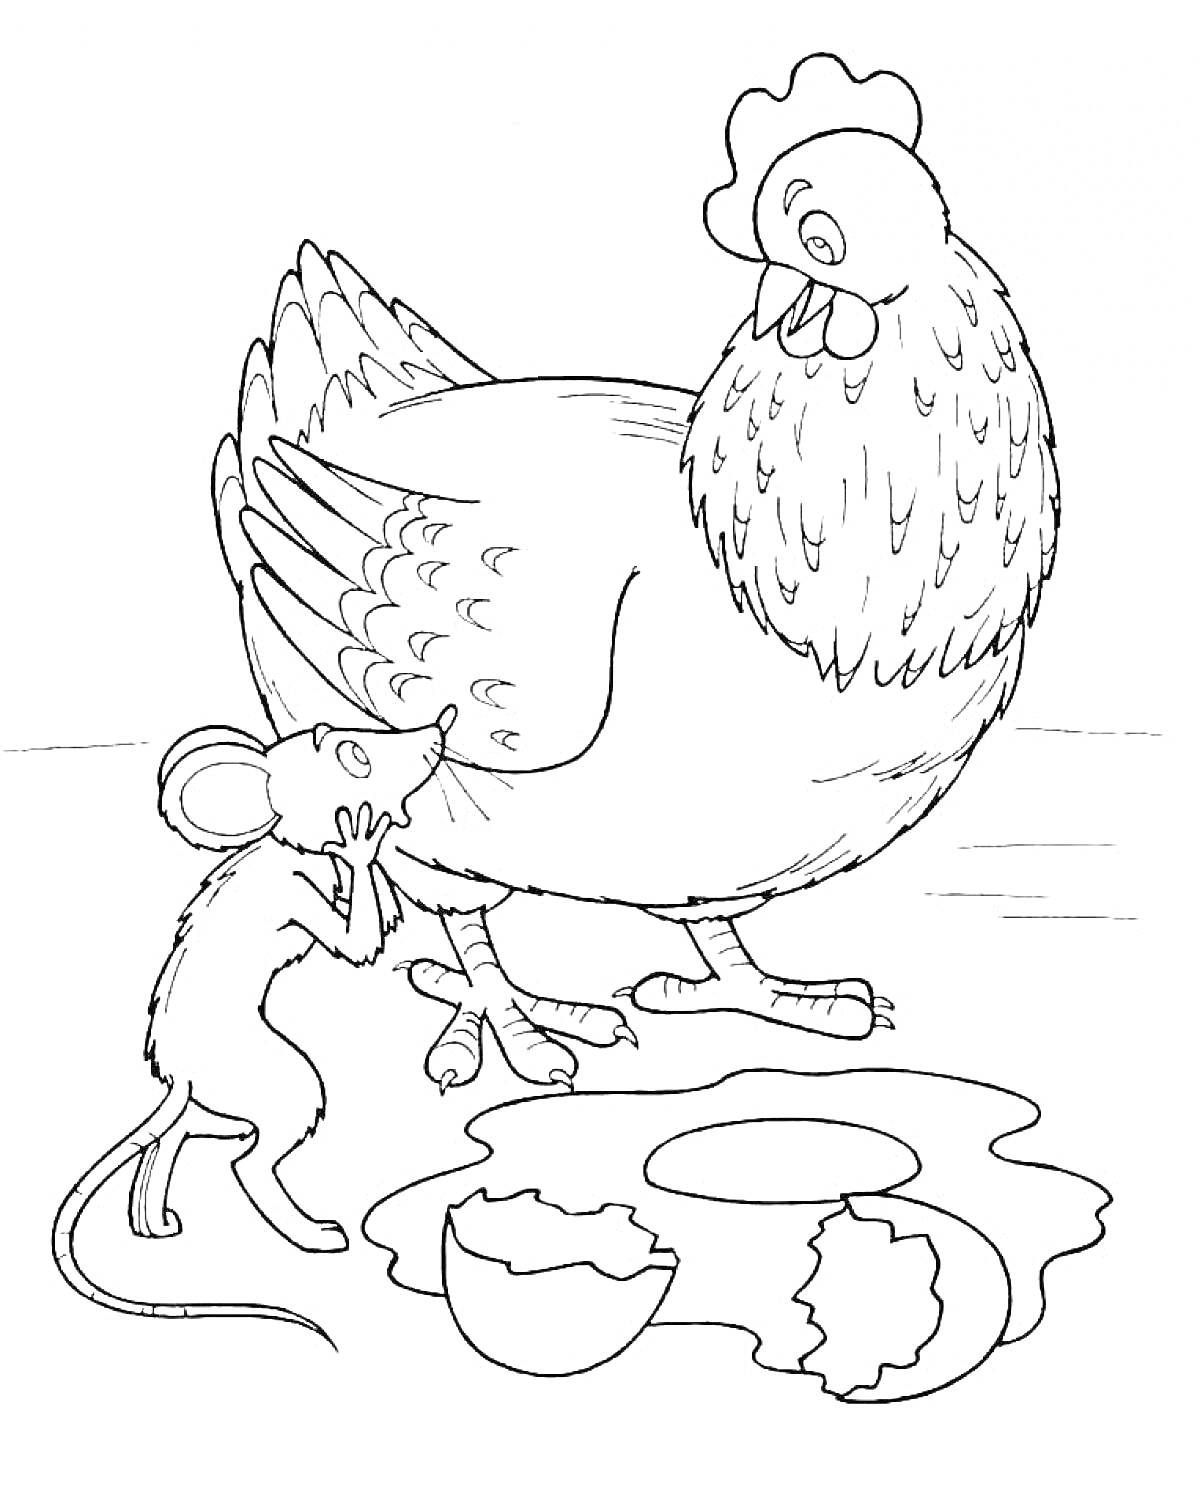 Раскраска Курица и мышка рядом с разбитым яйцом